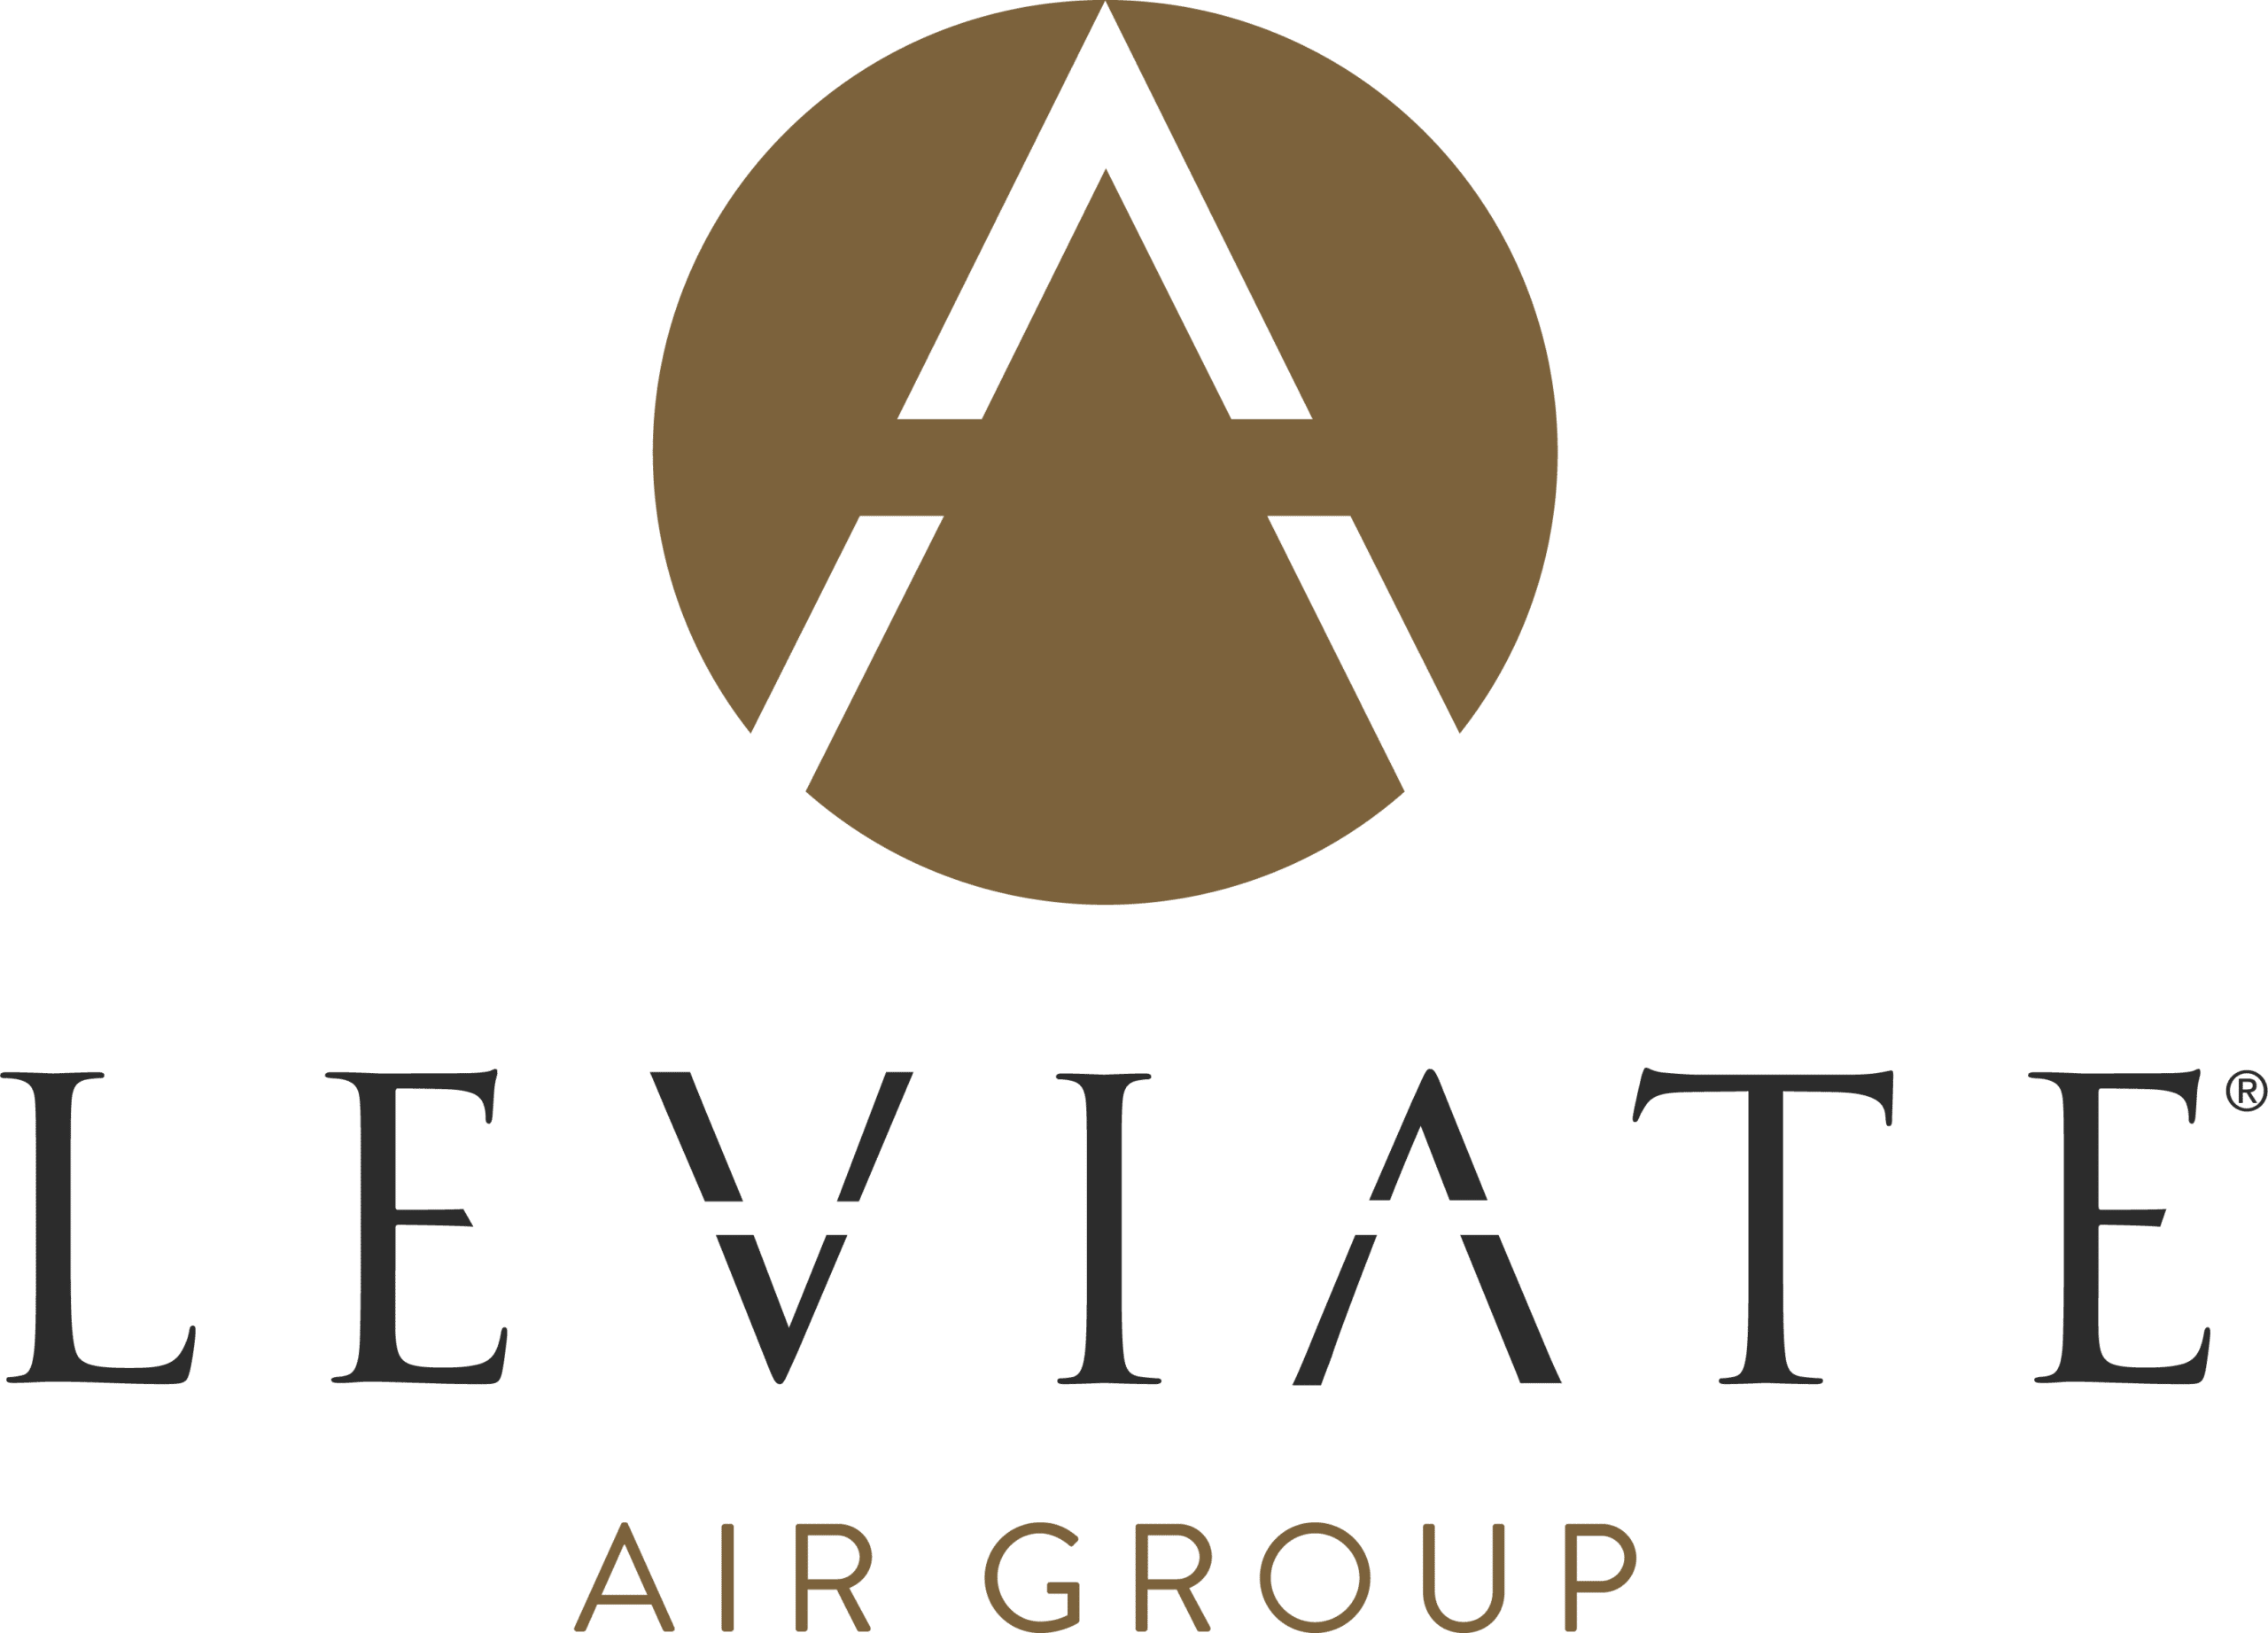 Leviate Jet Sales